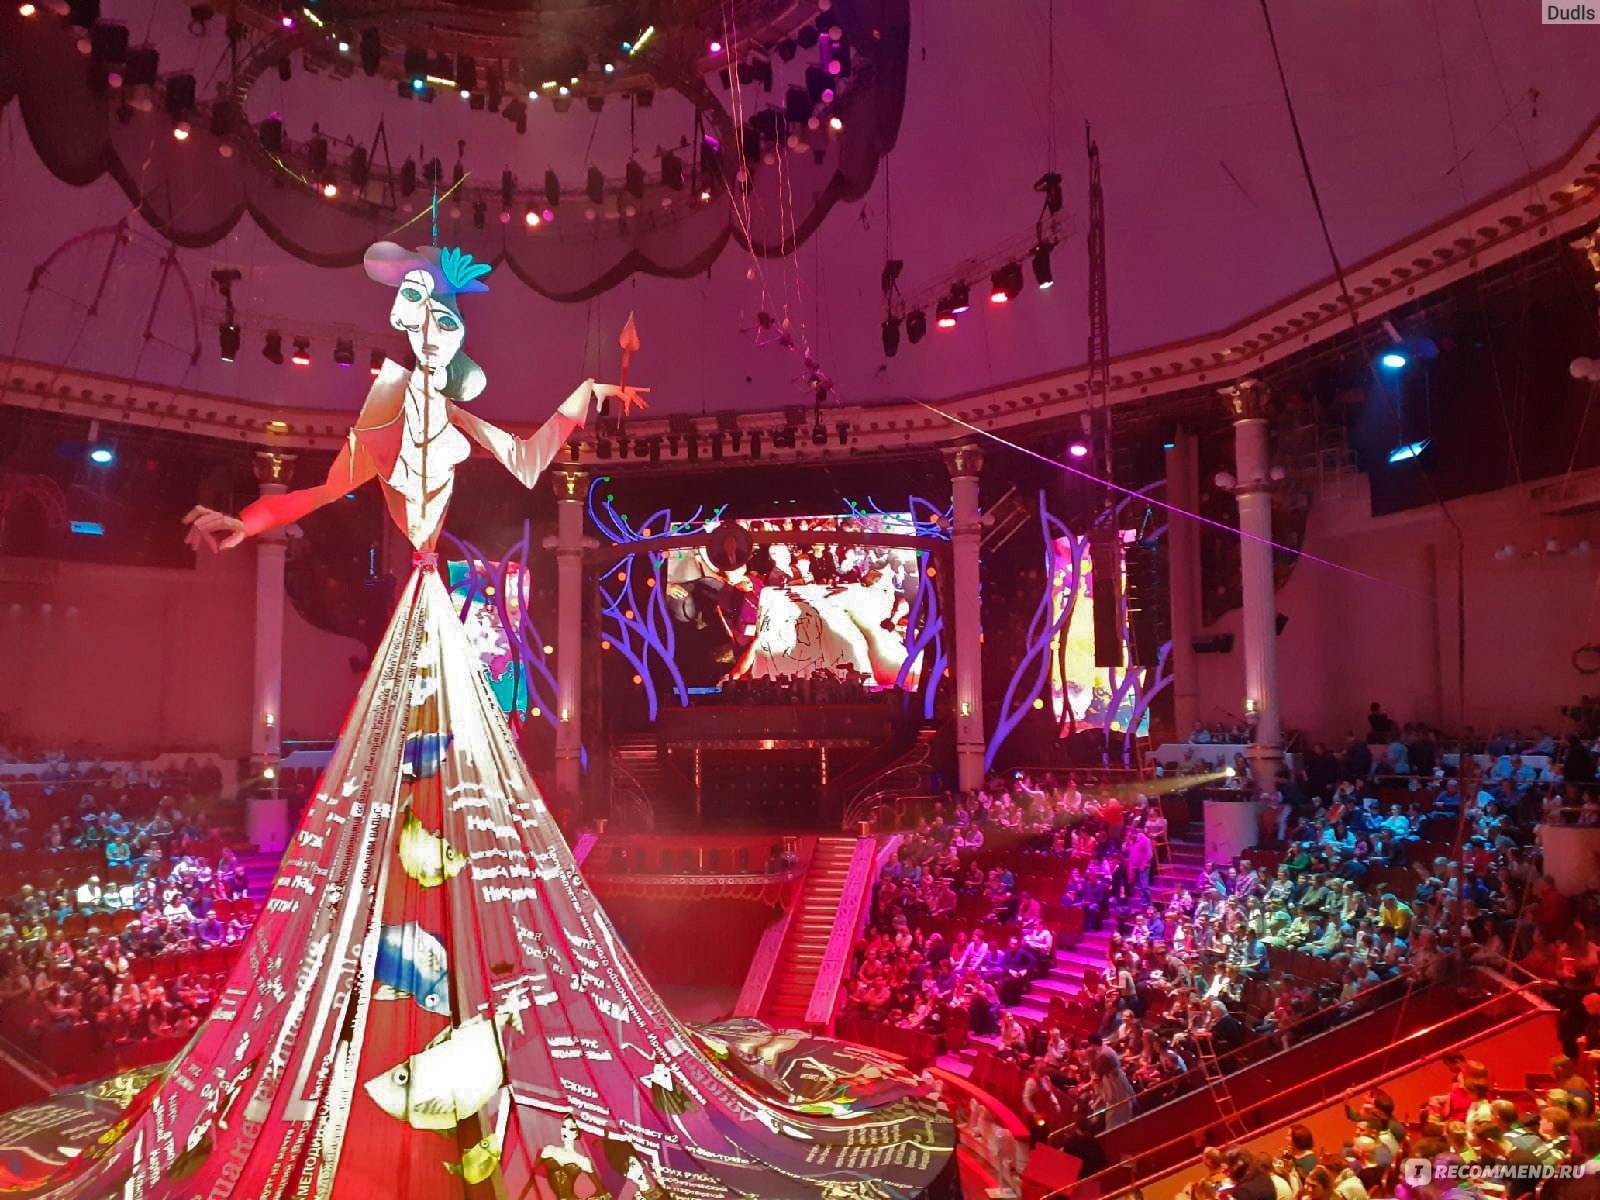 фото зала цирка на цветном